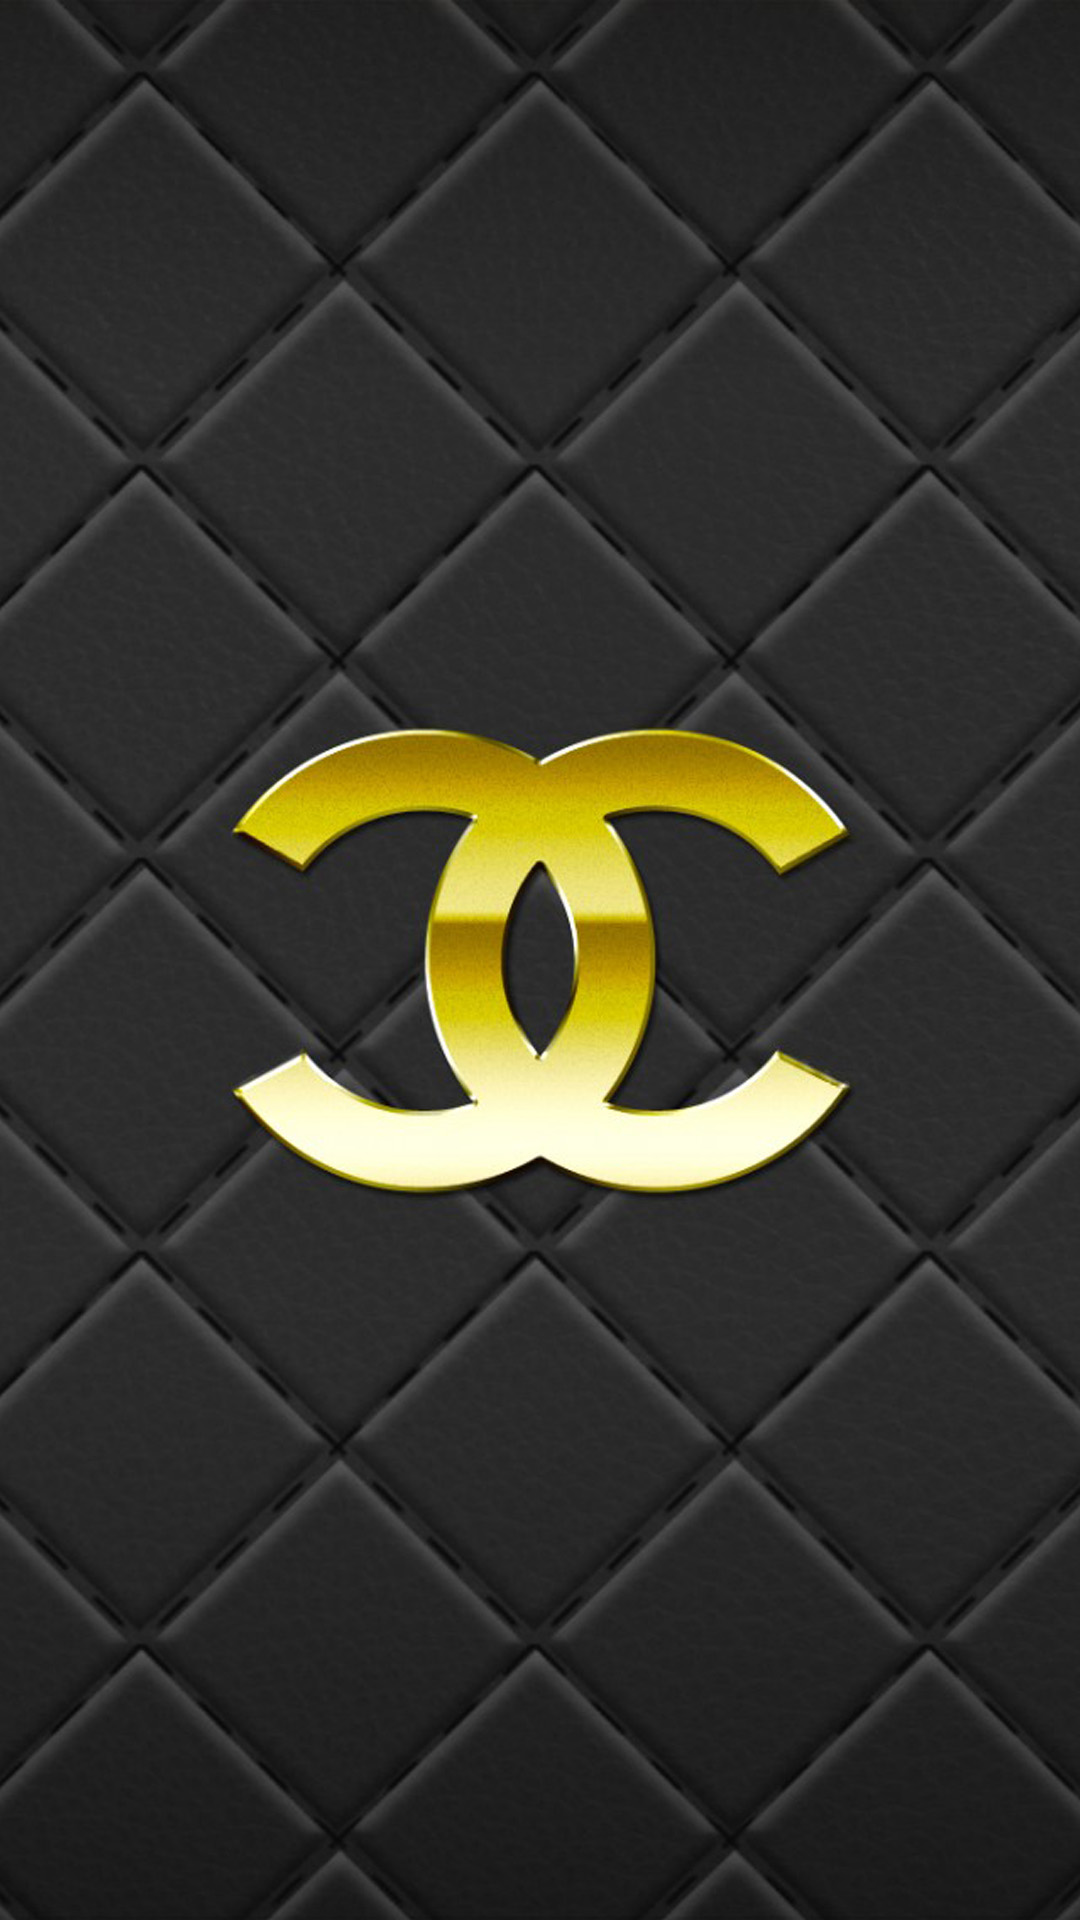 12+] Chanel Gold Logo Wallpapers - WallpaperSafari